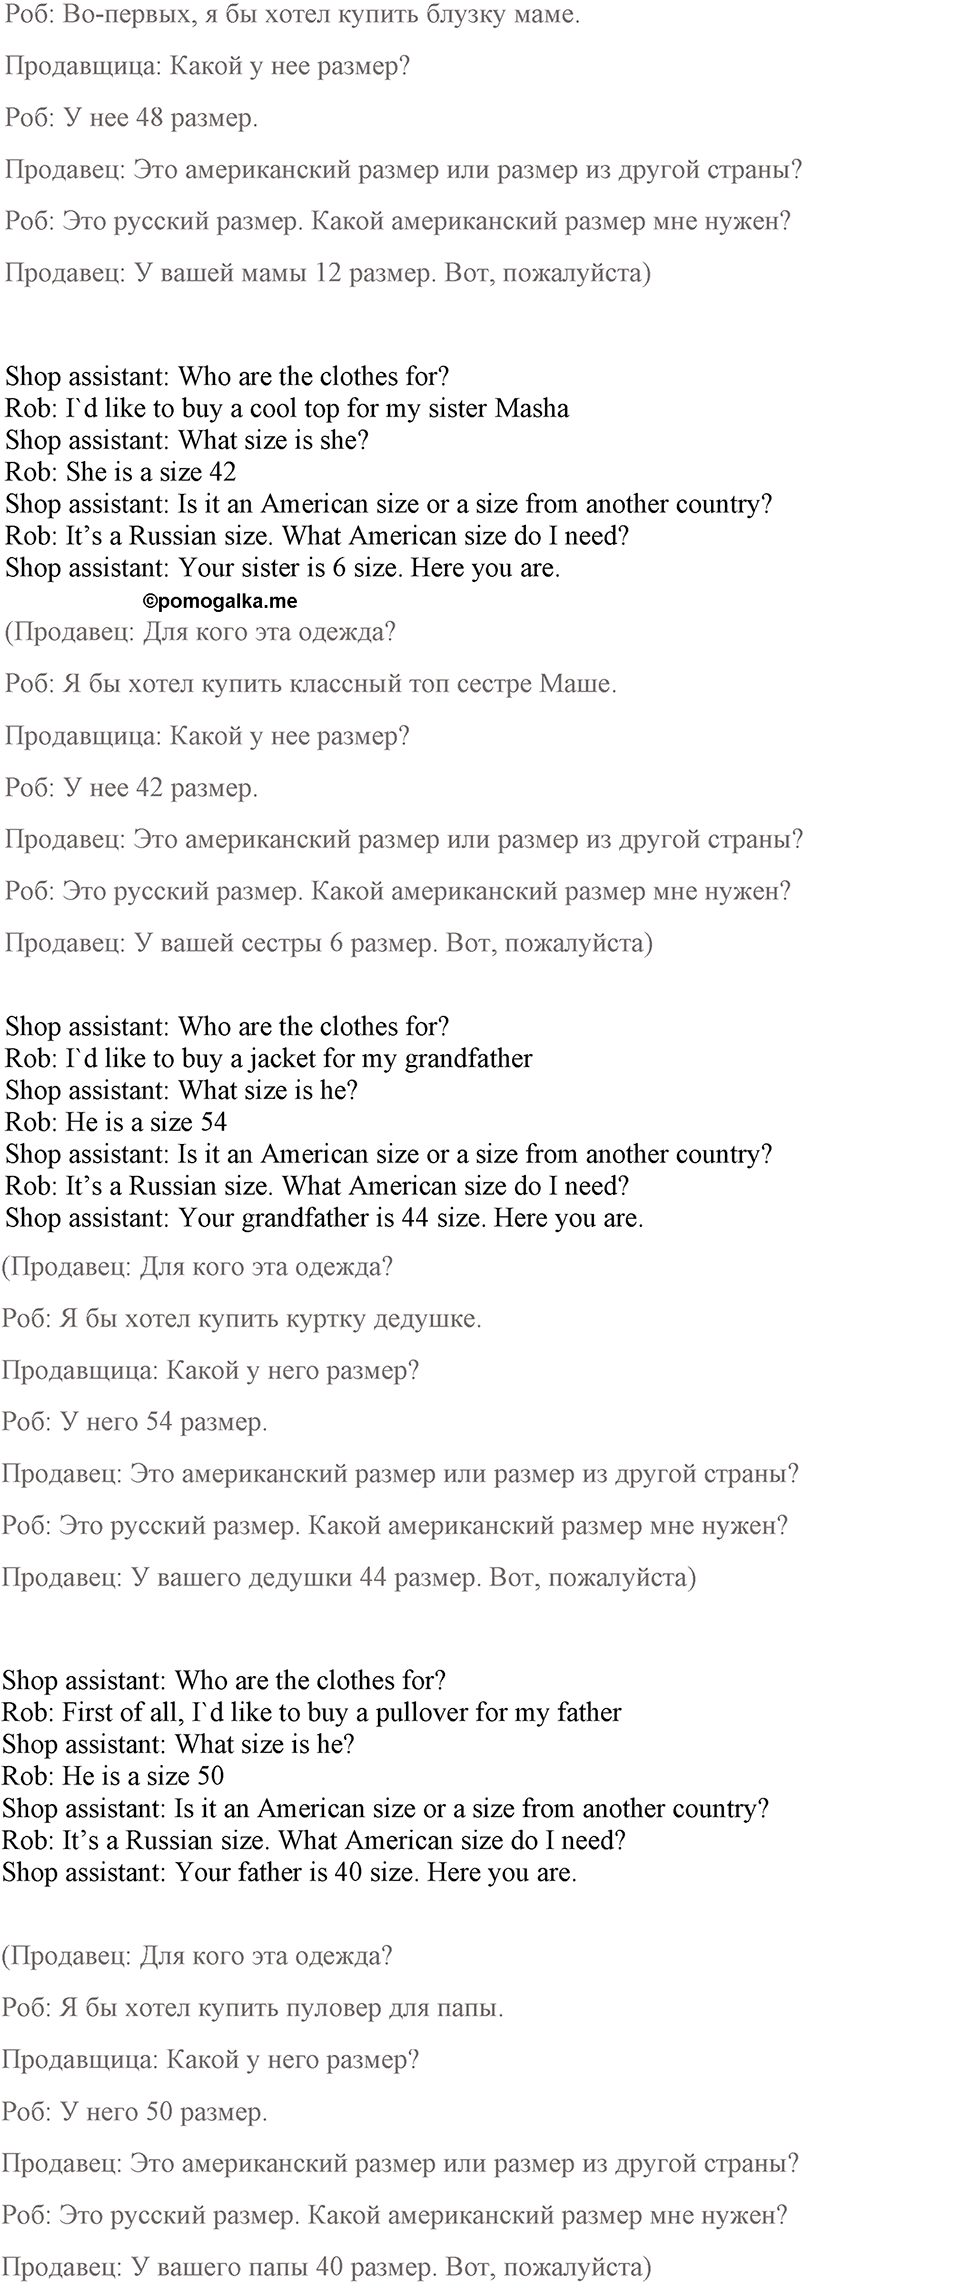 Unit 2 lesson 6-7 exercise №10 английский язык 9 класс Happy English.ru